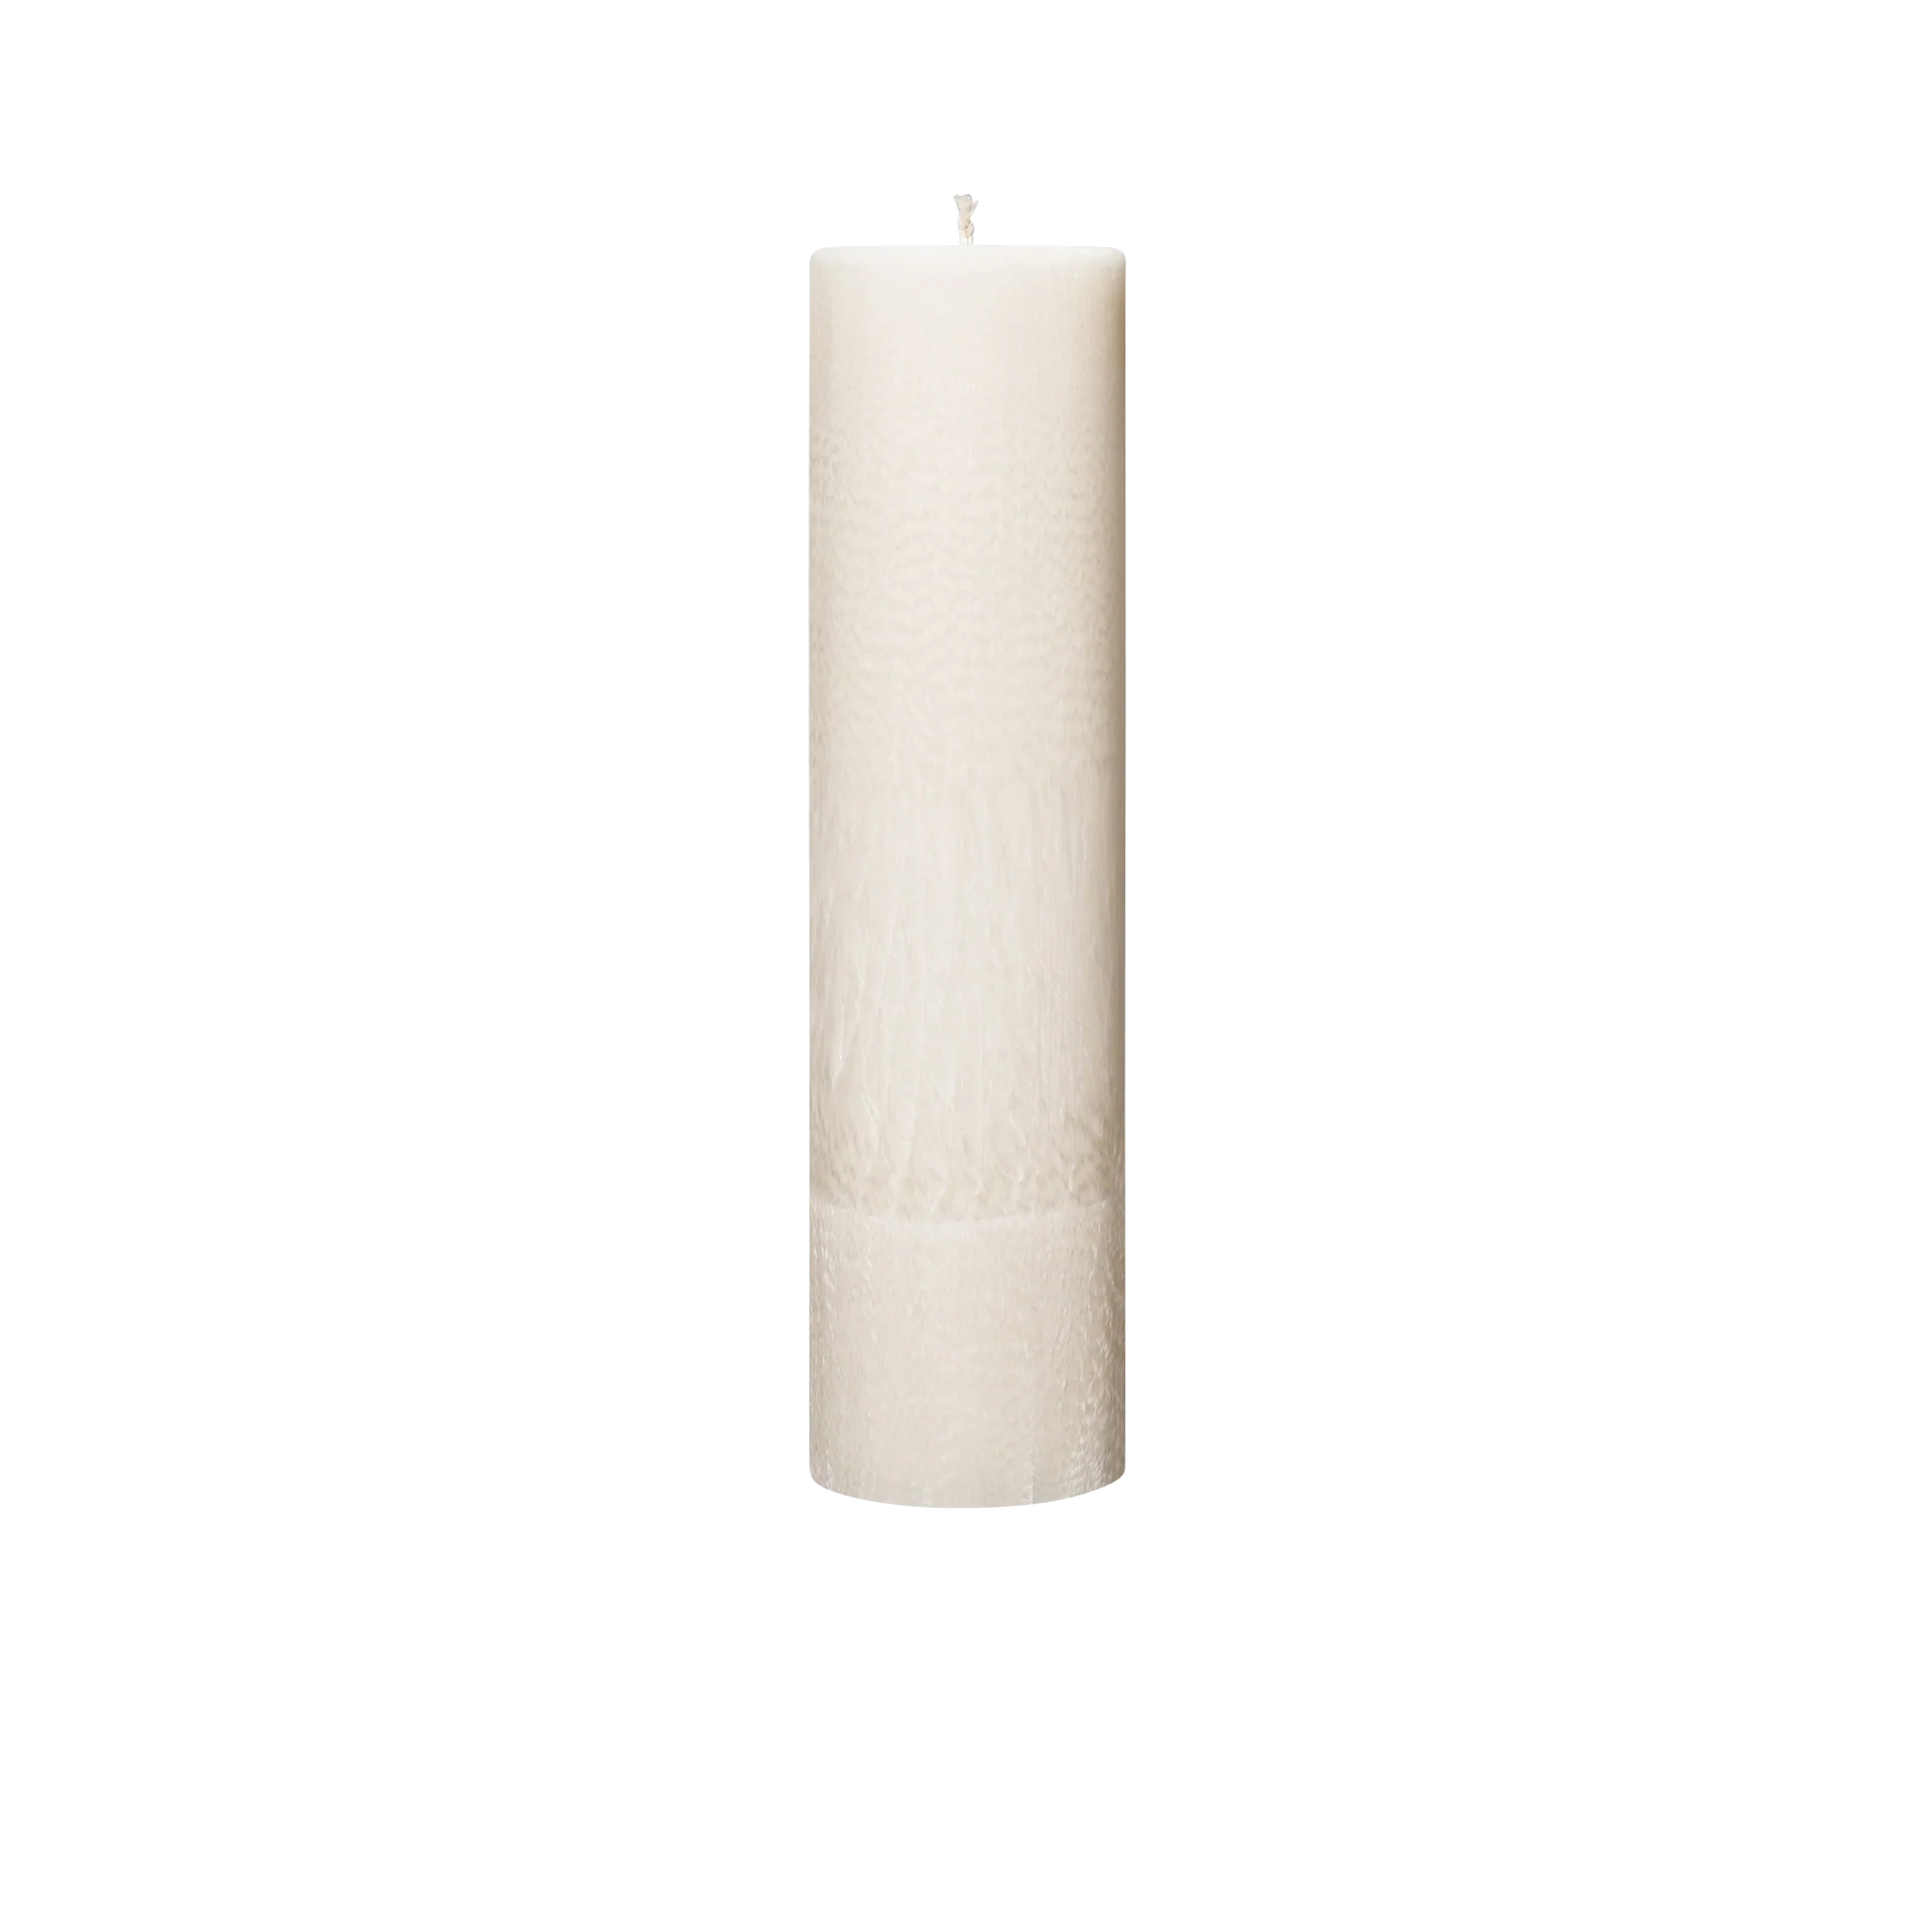 large ivory pillar candles